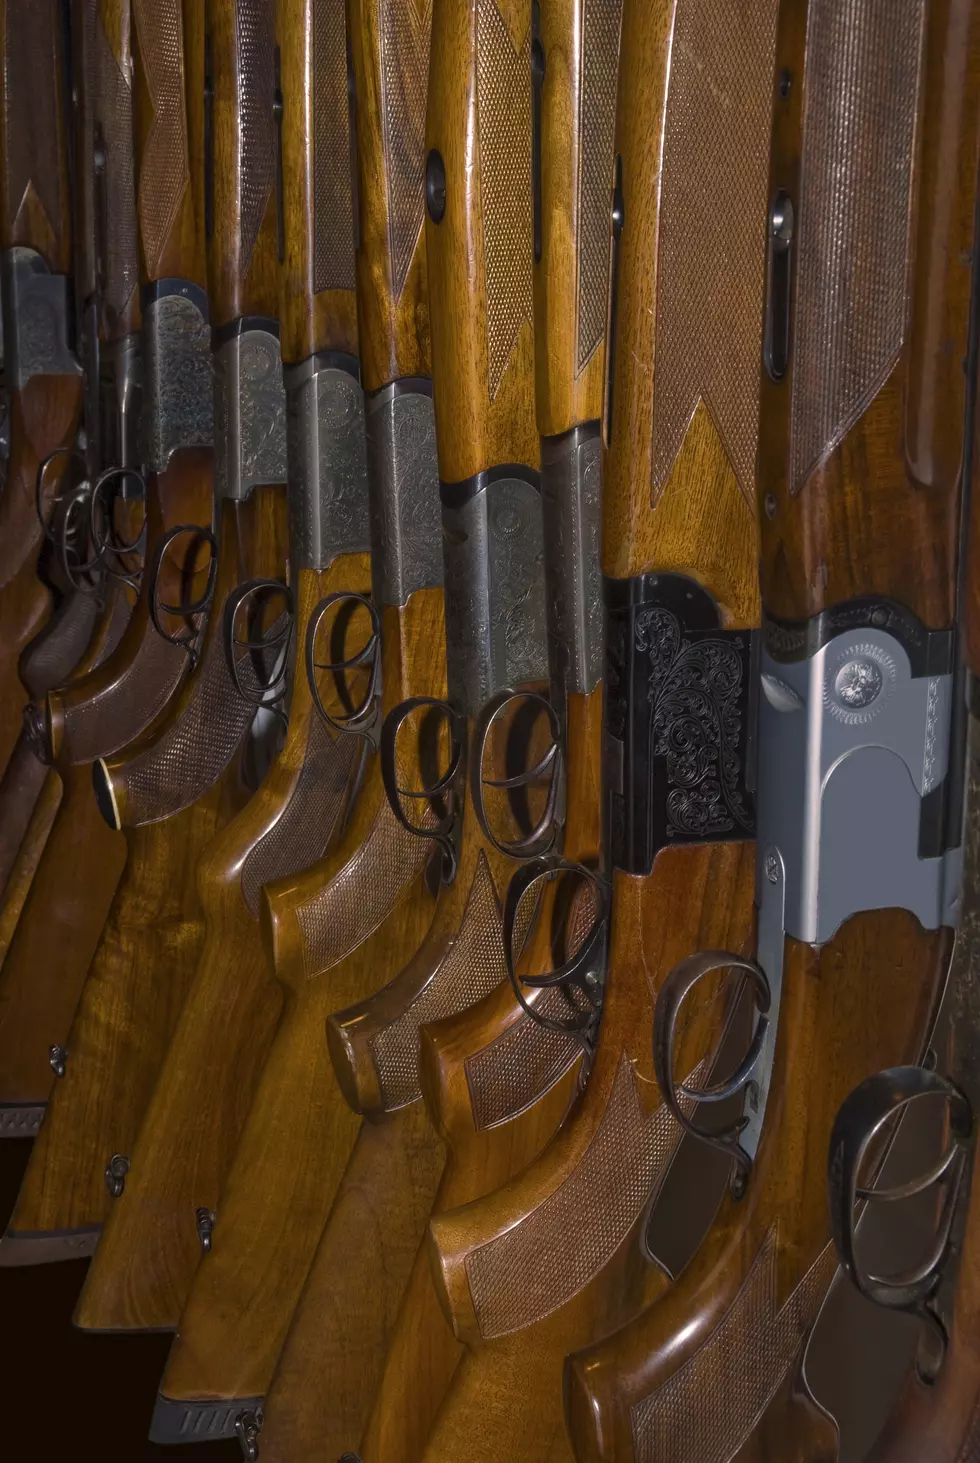 Hunting Seasons, Elections Increase Local Gun Sales